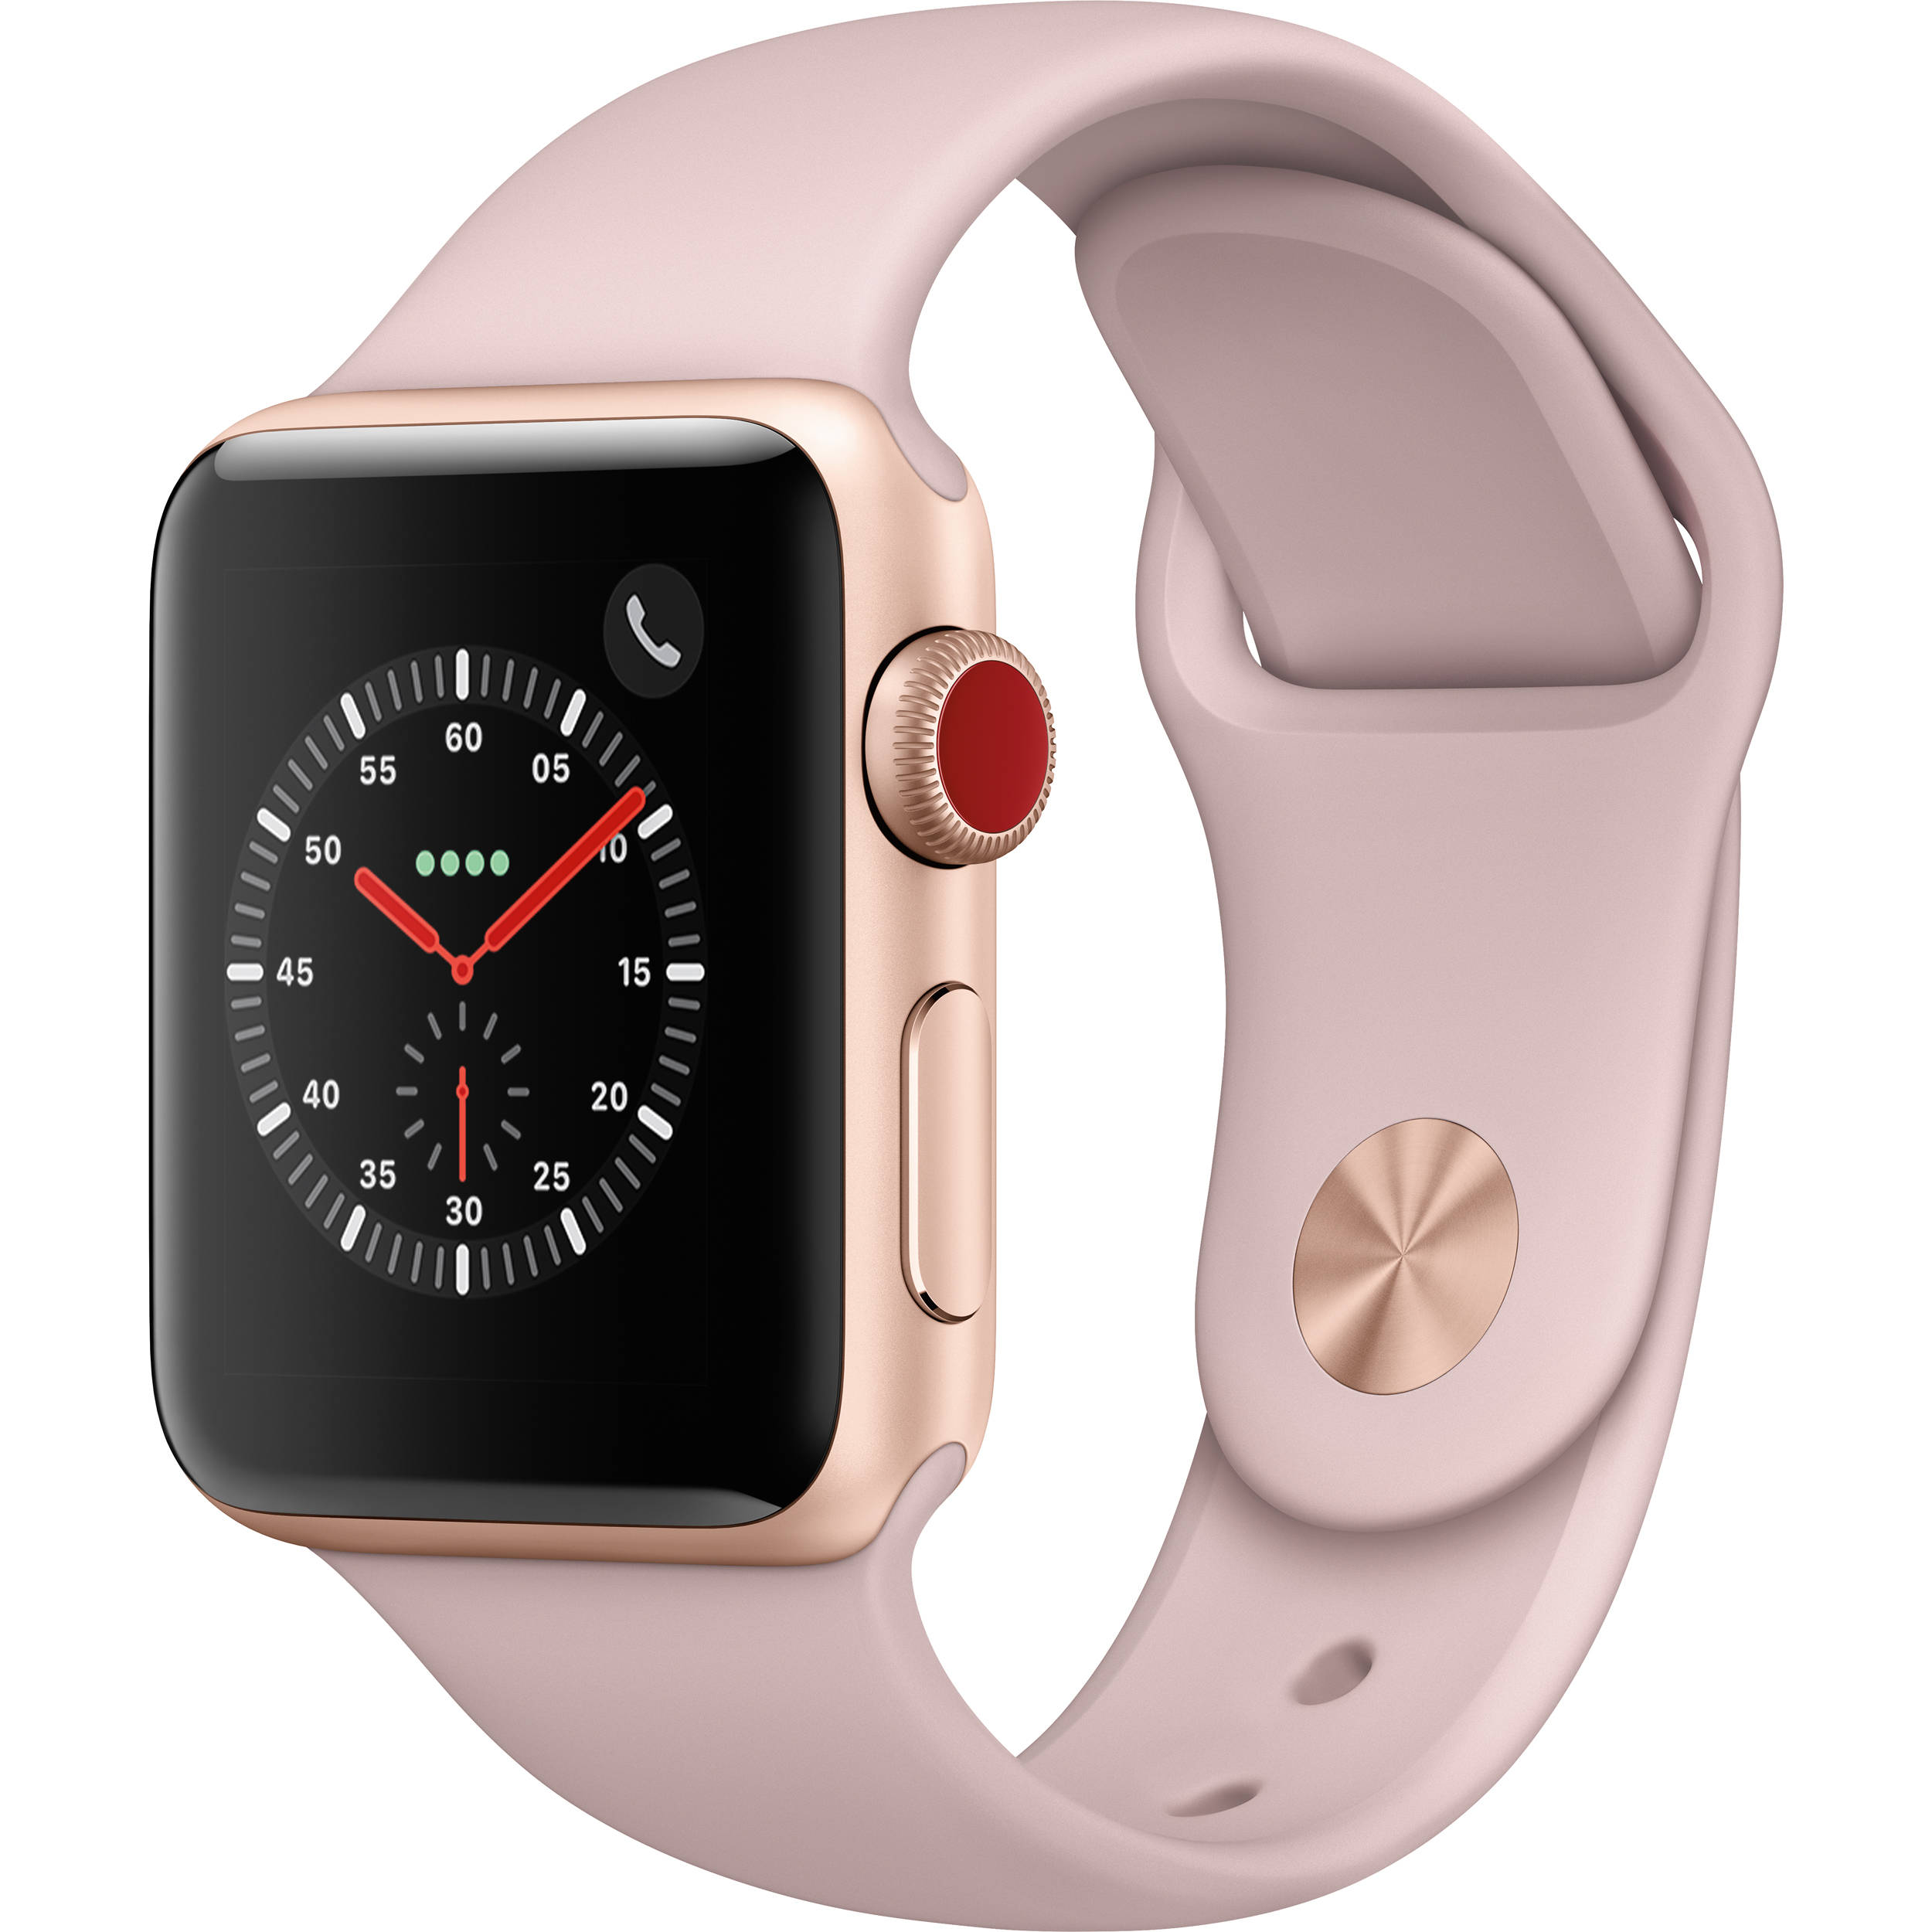 Apple Watch Serie 3 33mm Online Store, UP TO 69% OFF | www.loop-cn.com